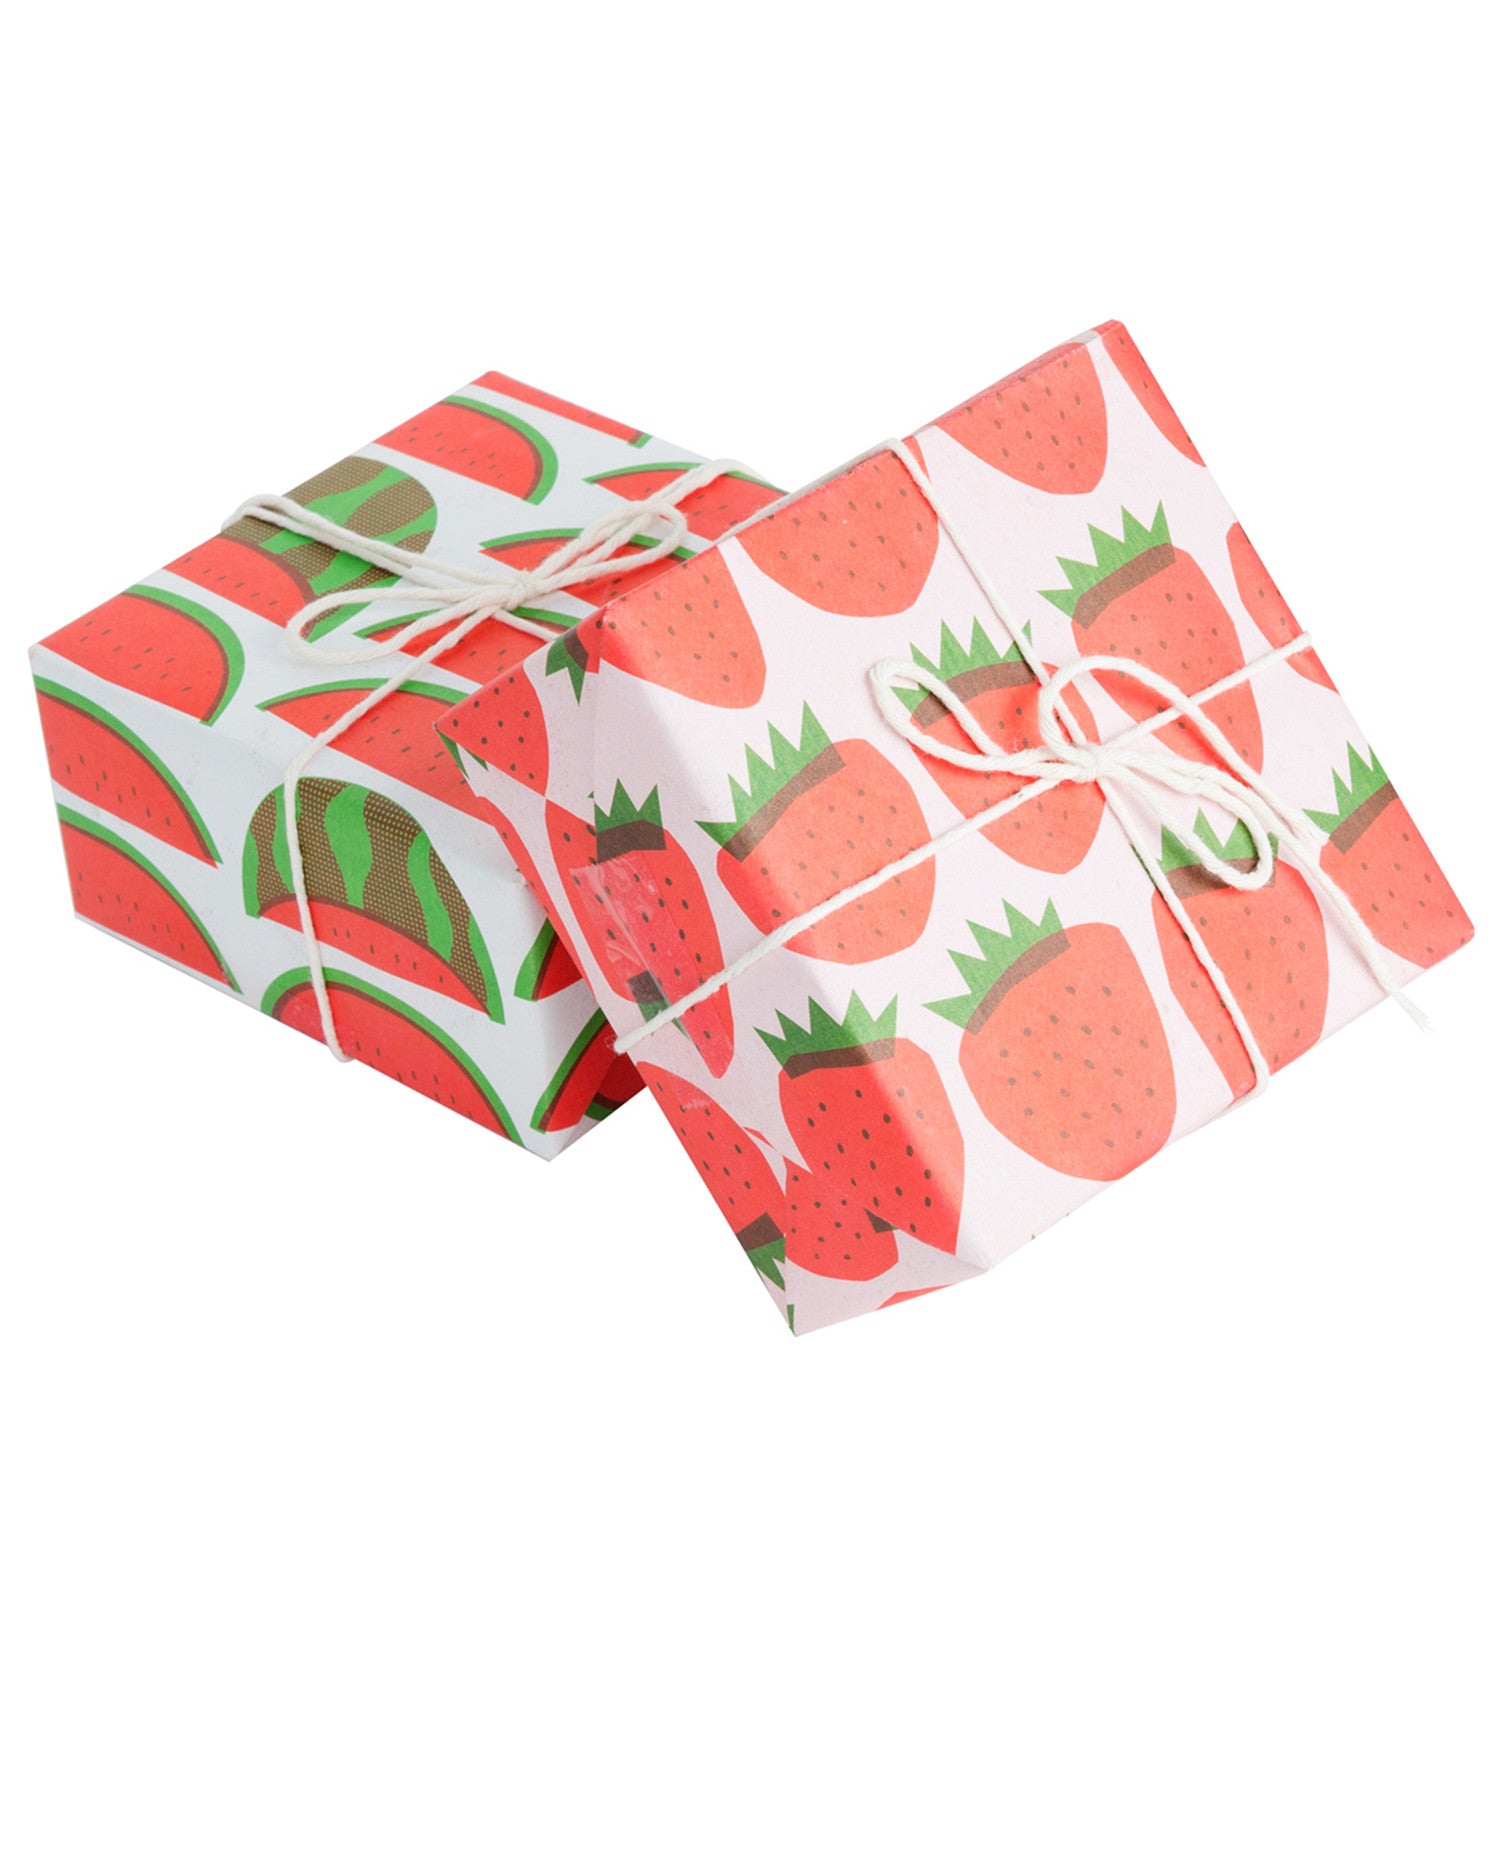 Strawberry Vines Flat Wrap - Wrap Shop, Paper Source